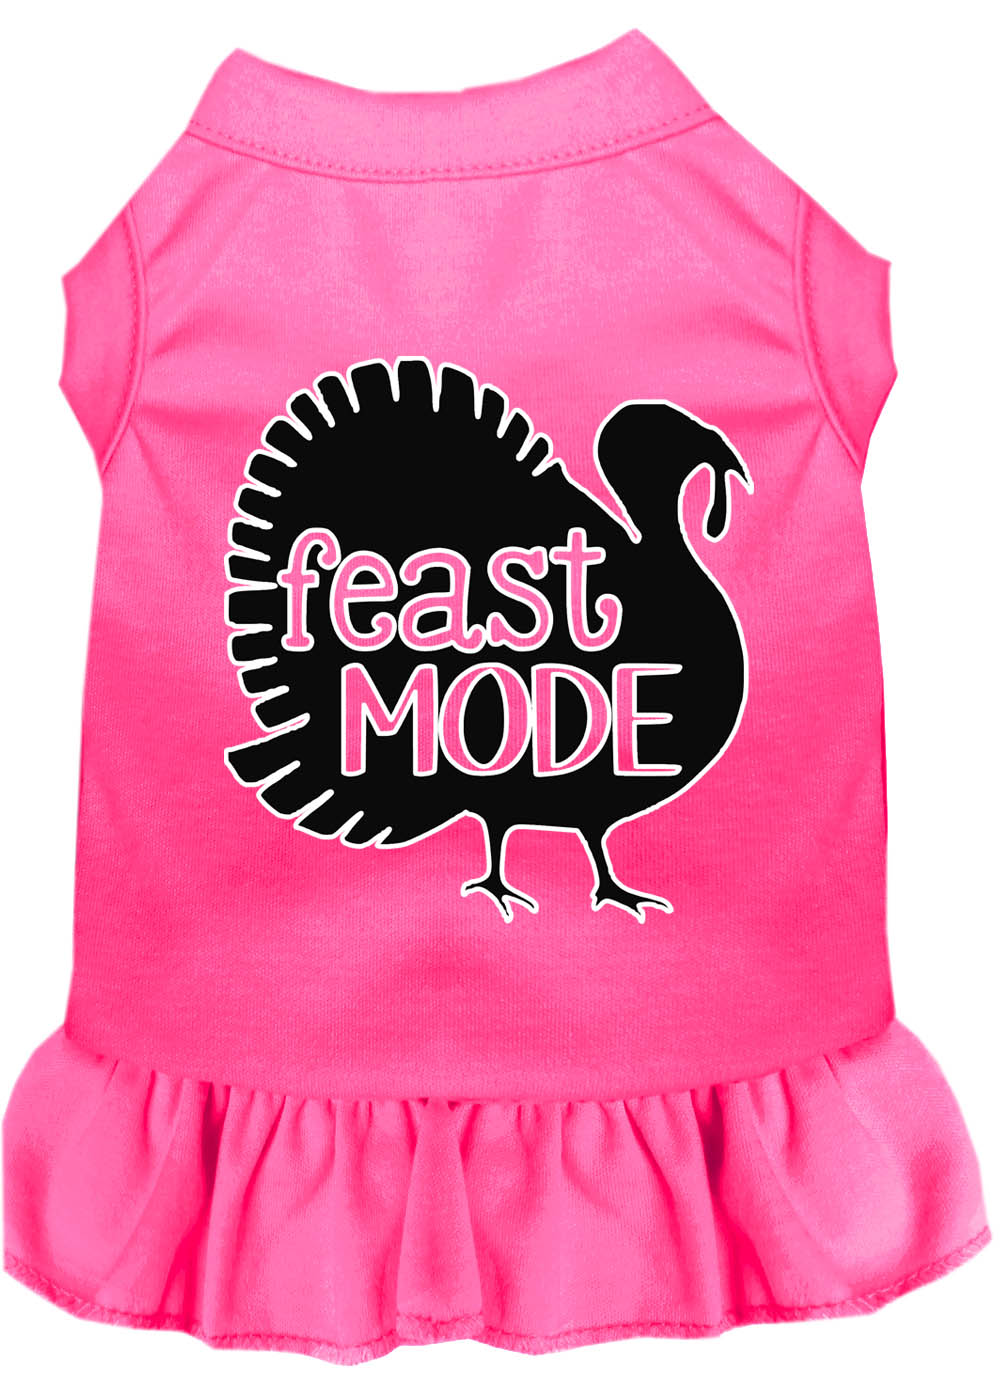 Feast Mode Screen Print Dog Dress Bright Pink XXXL